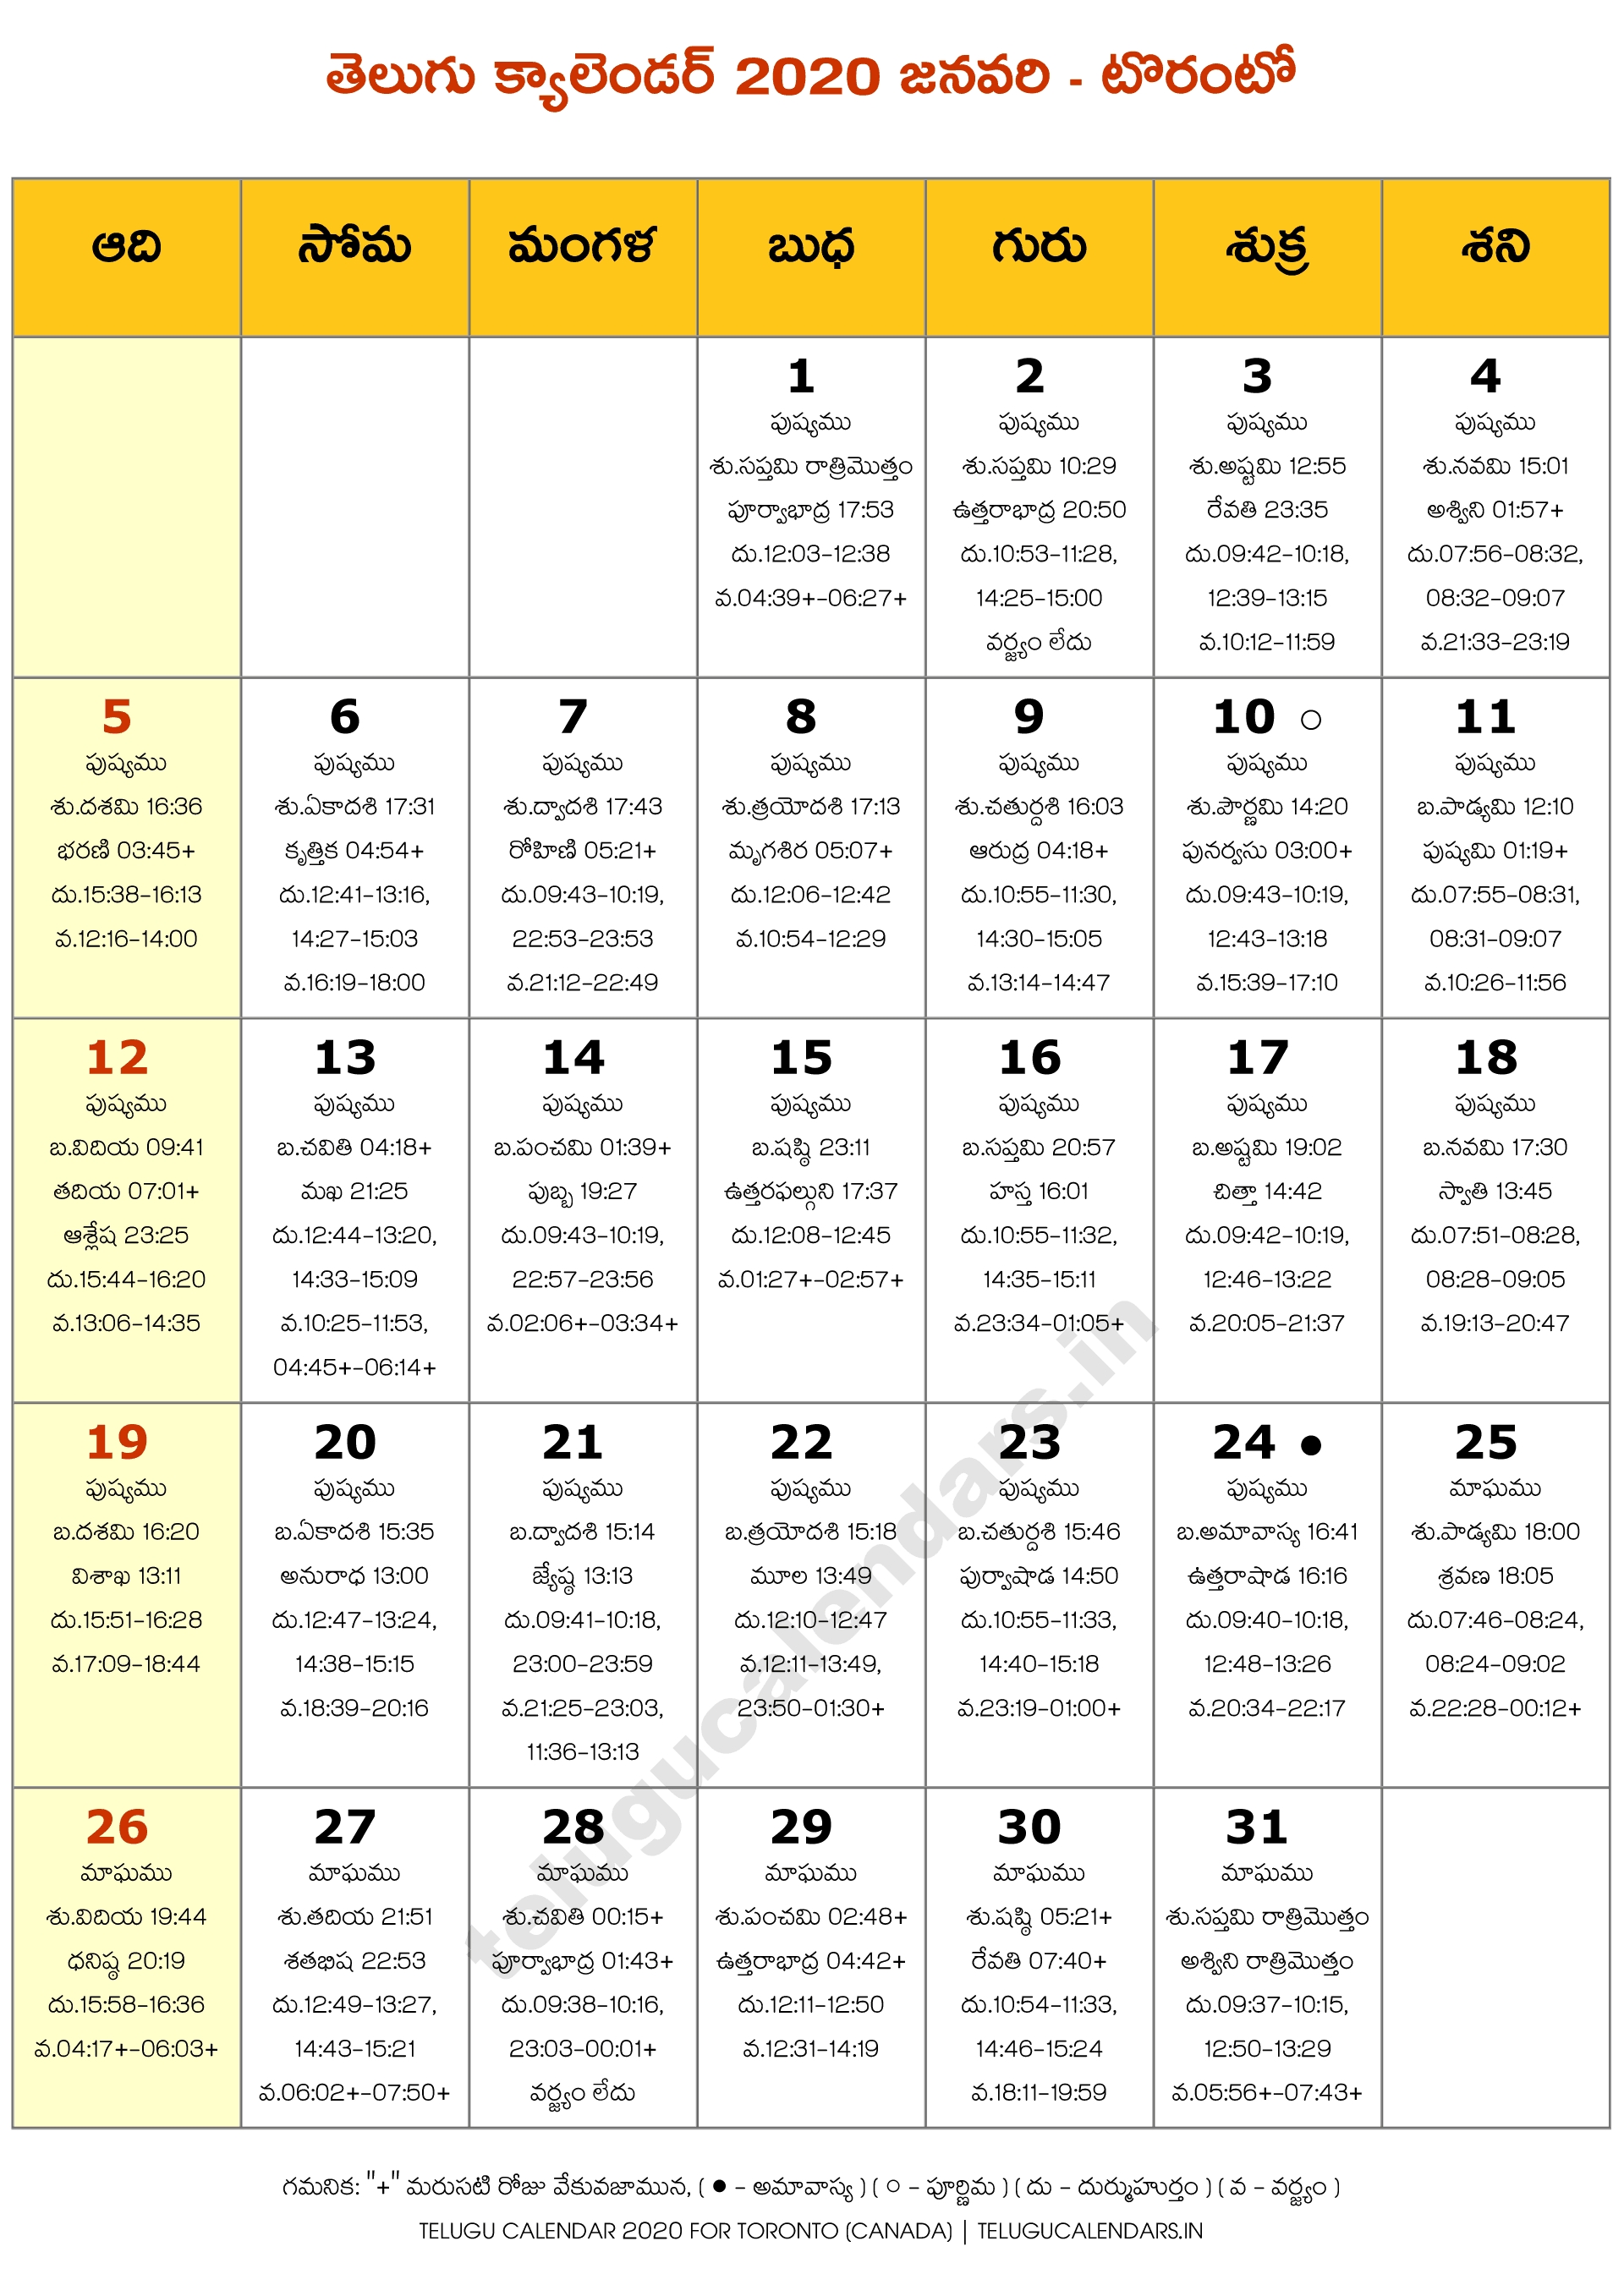 Toronto 2020 January Telugu Calendar | Telugu Calendars Incredible 2020 Telugu Calendar January